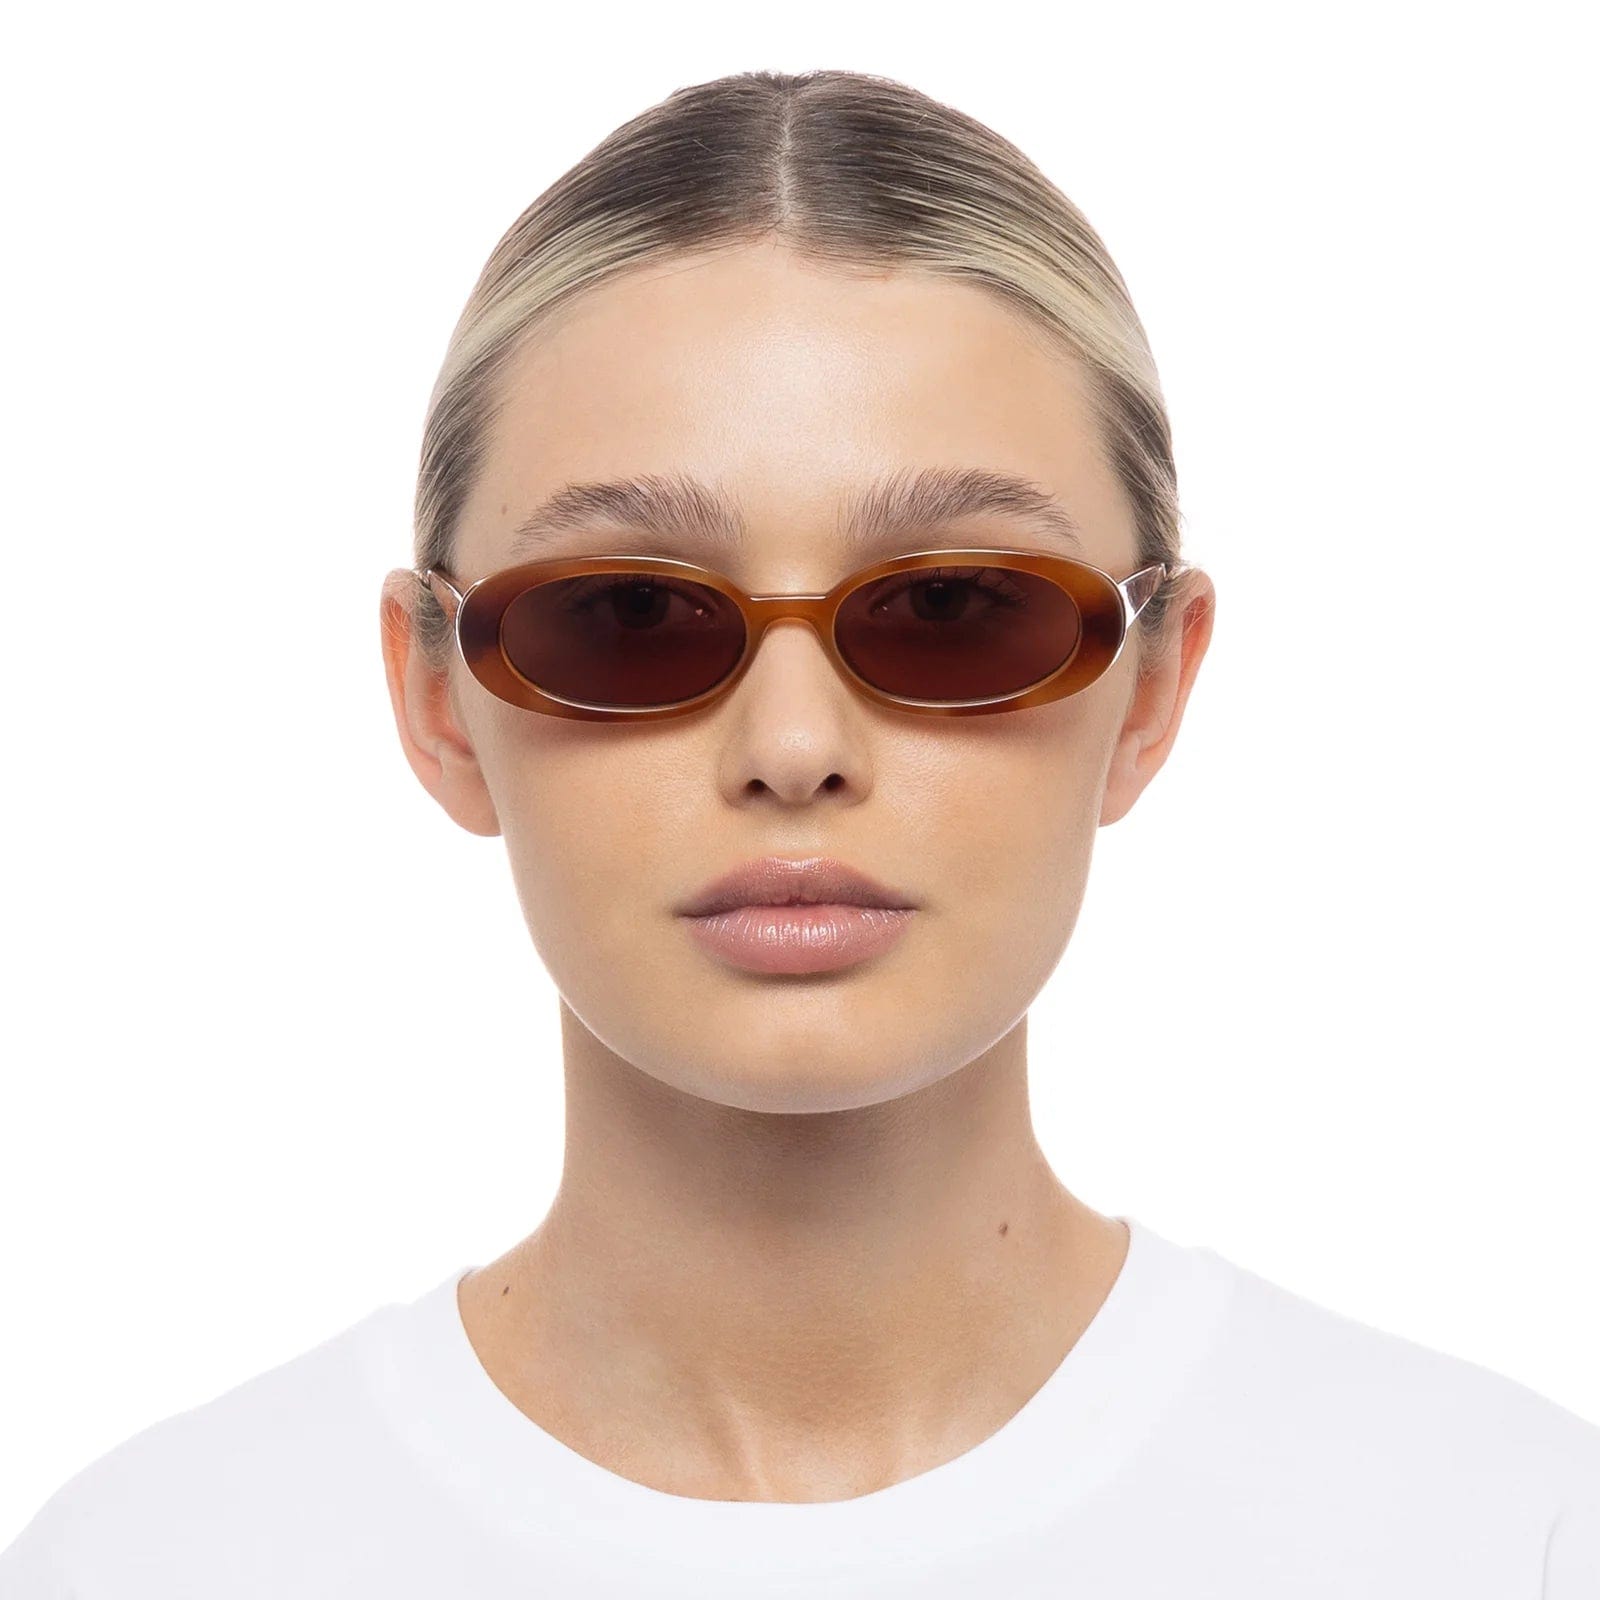 Le Specs Outta Love Vintage Tort Sunglasses